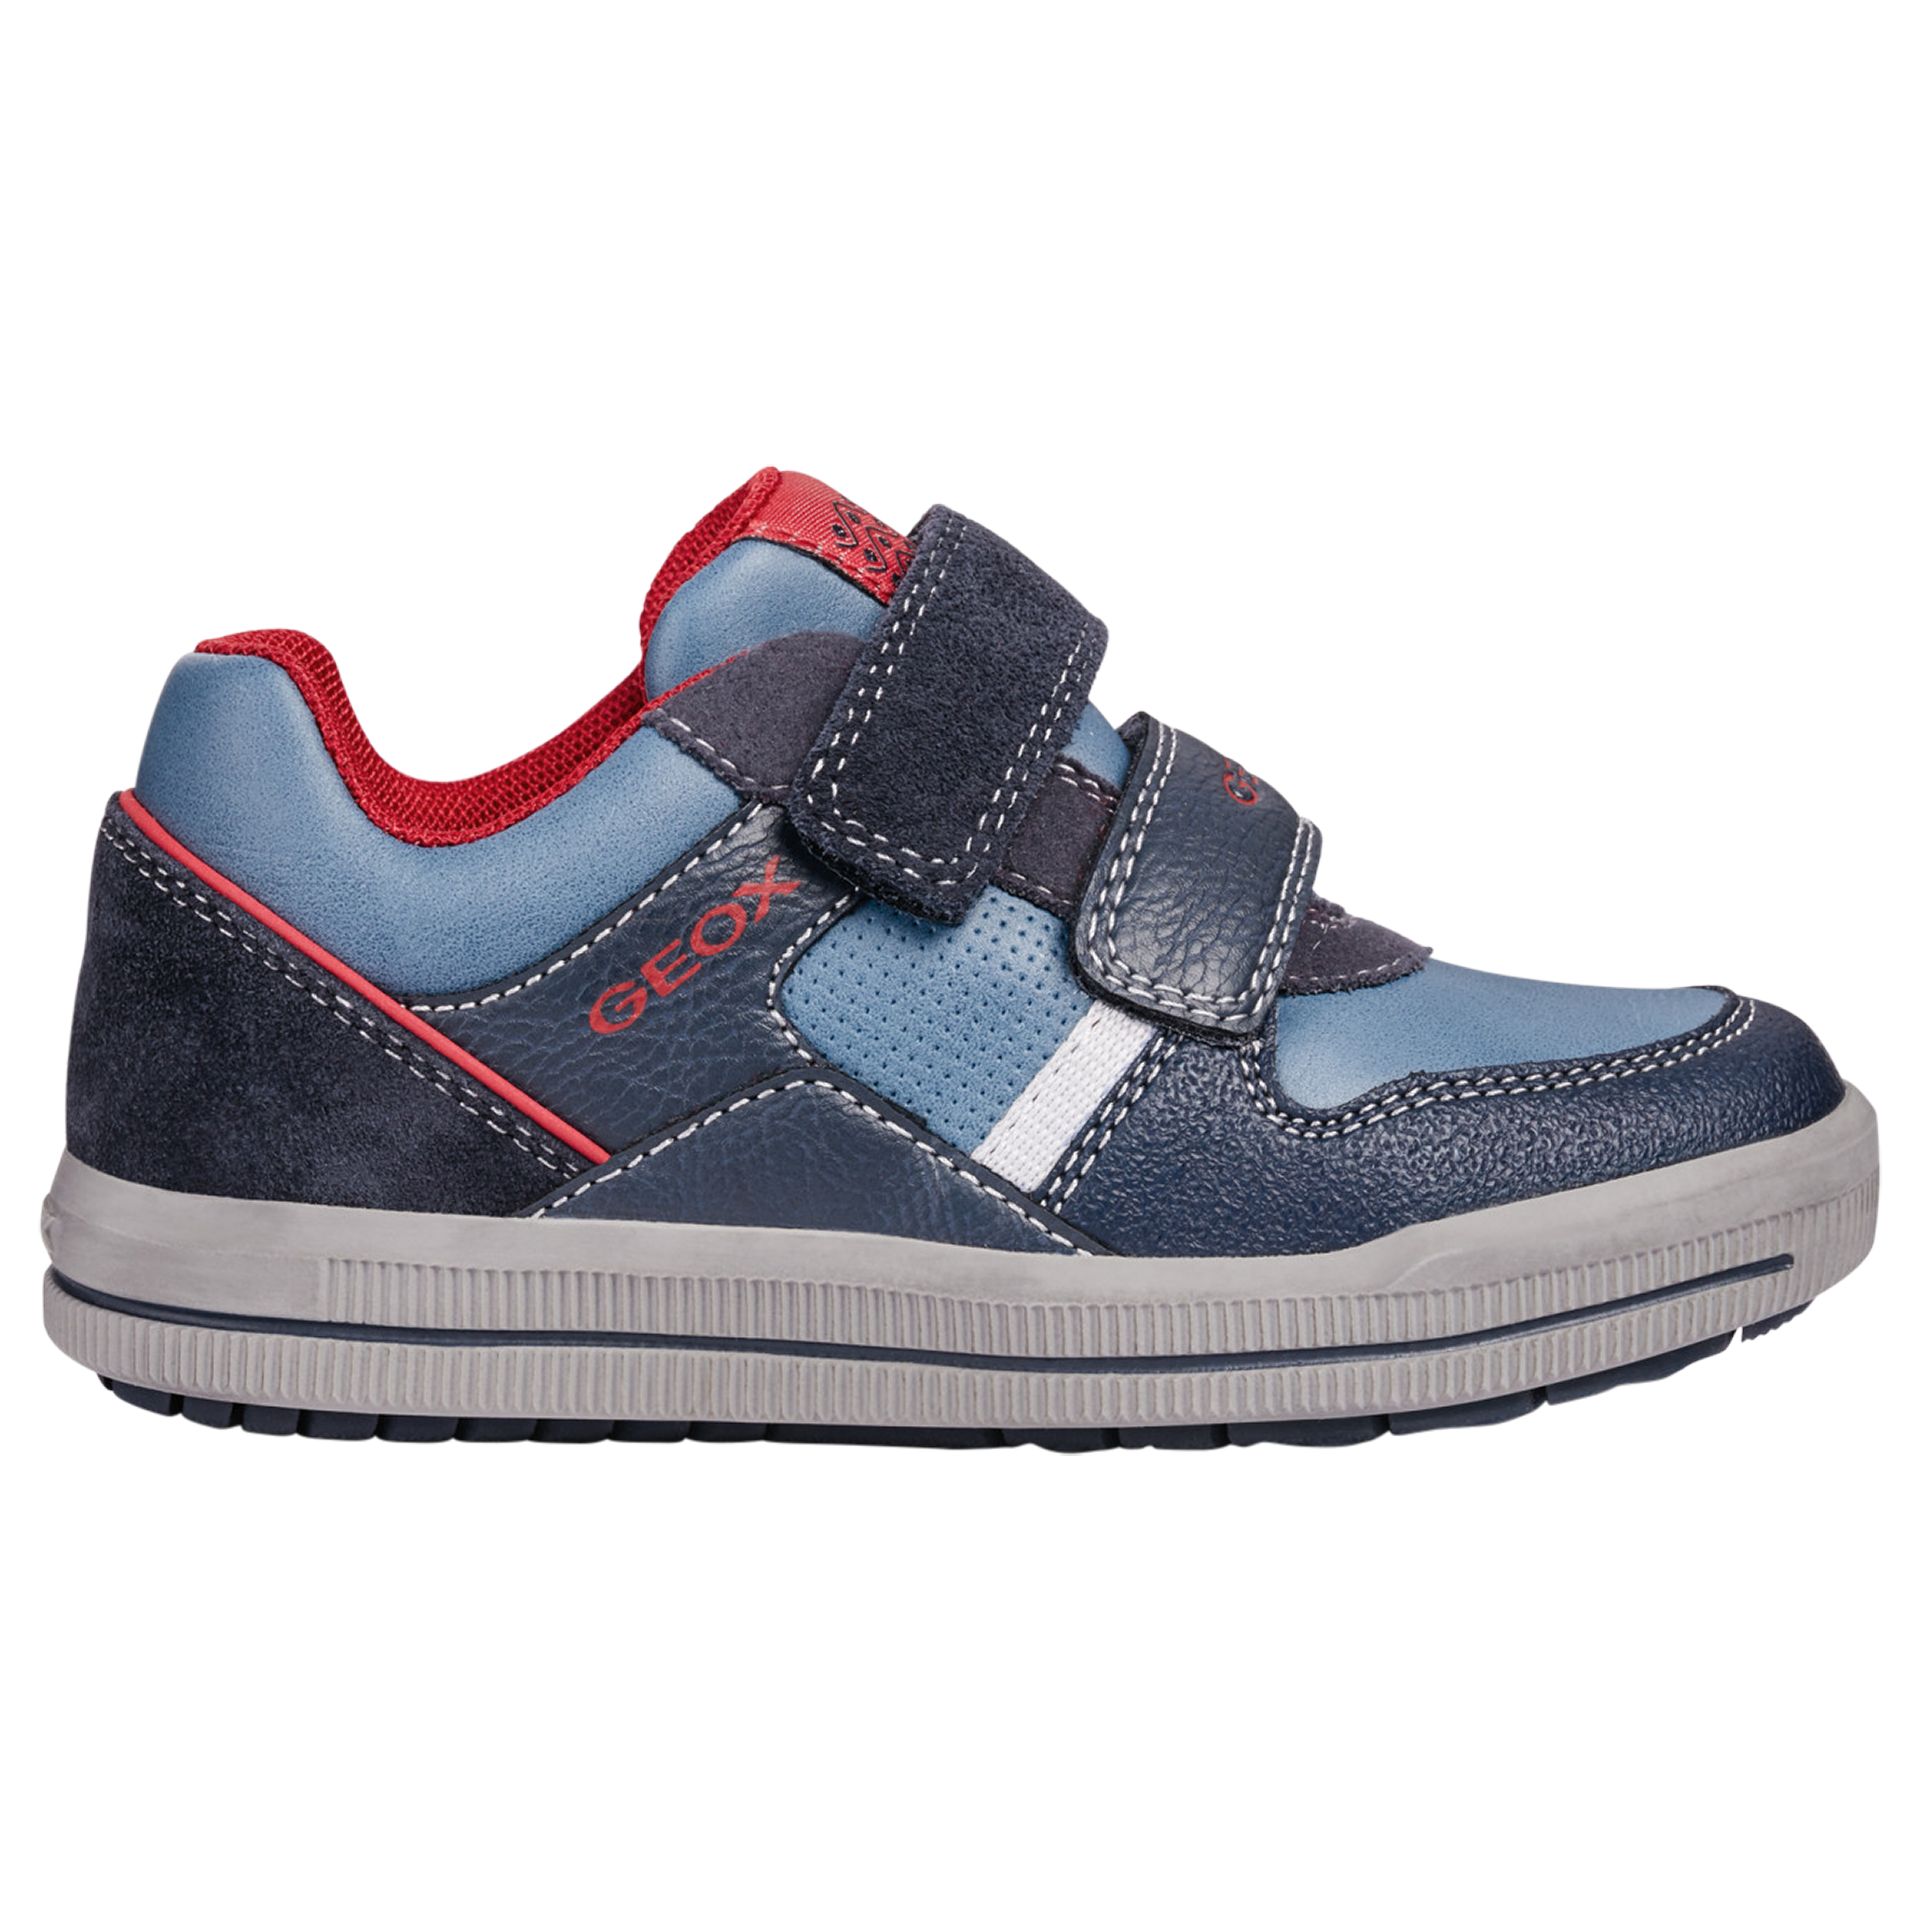 Geox Children's Arzach Casual Riptape Shoes, Blue